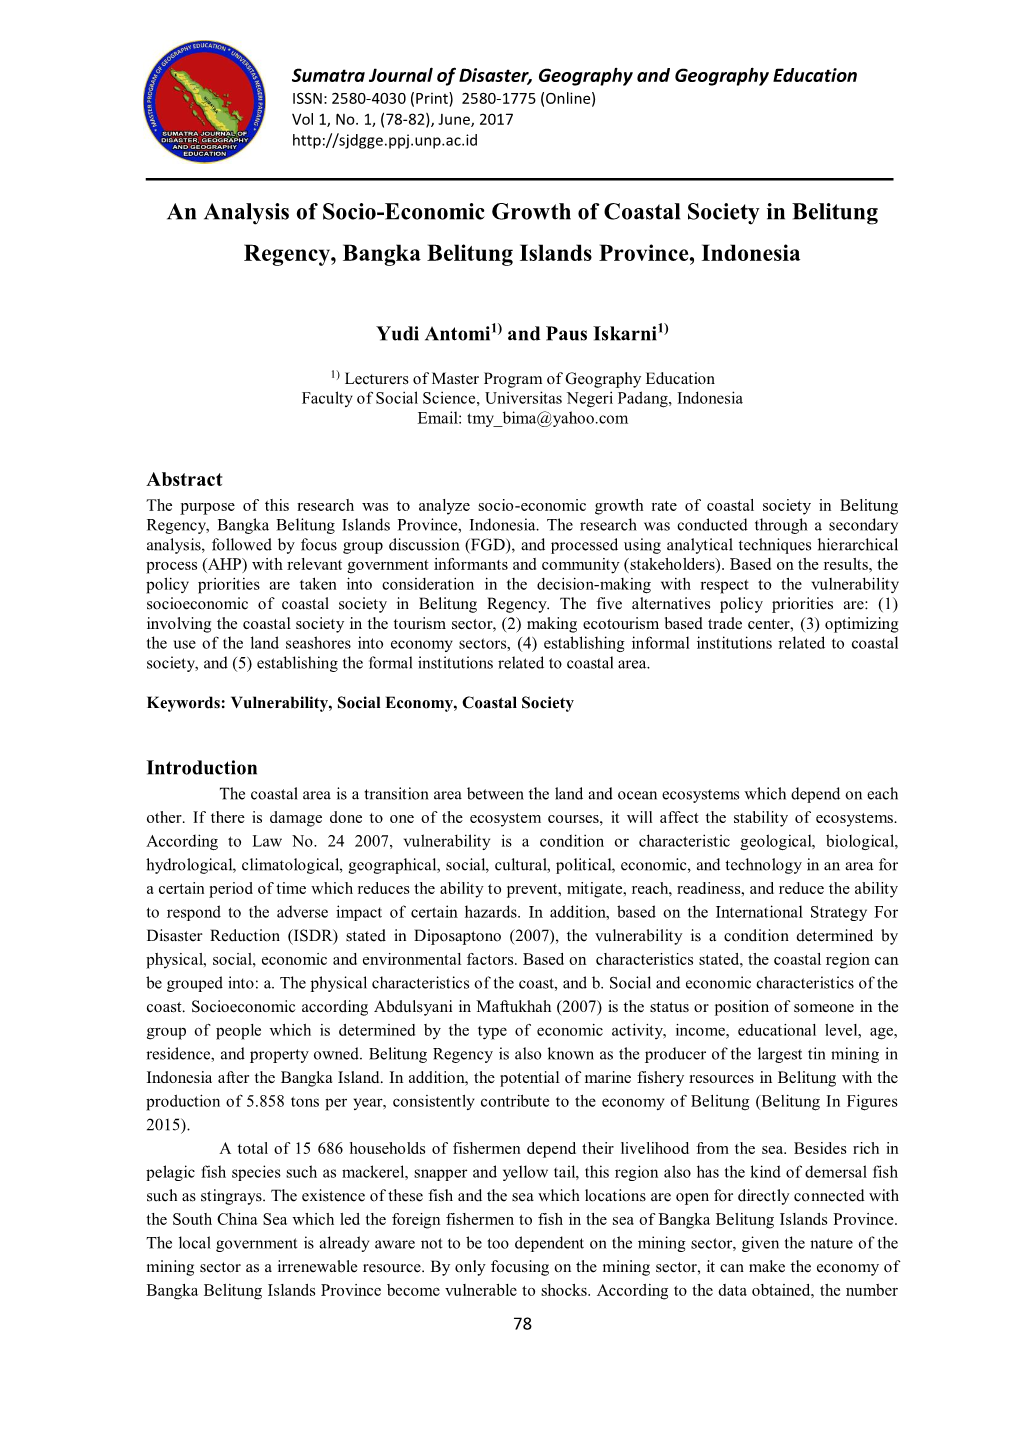 An Analysis of Socio-Economic Growth of Coastal Society in Belitung Regency, Bangka Belitung Islands Province, Indonesia